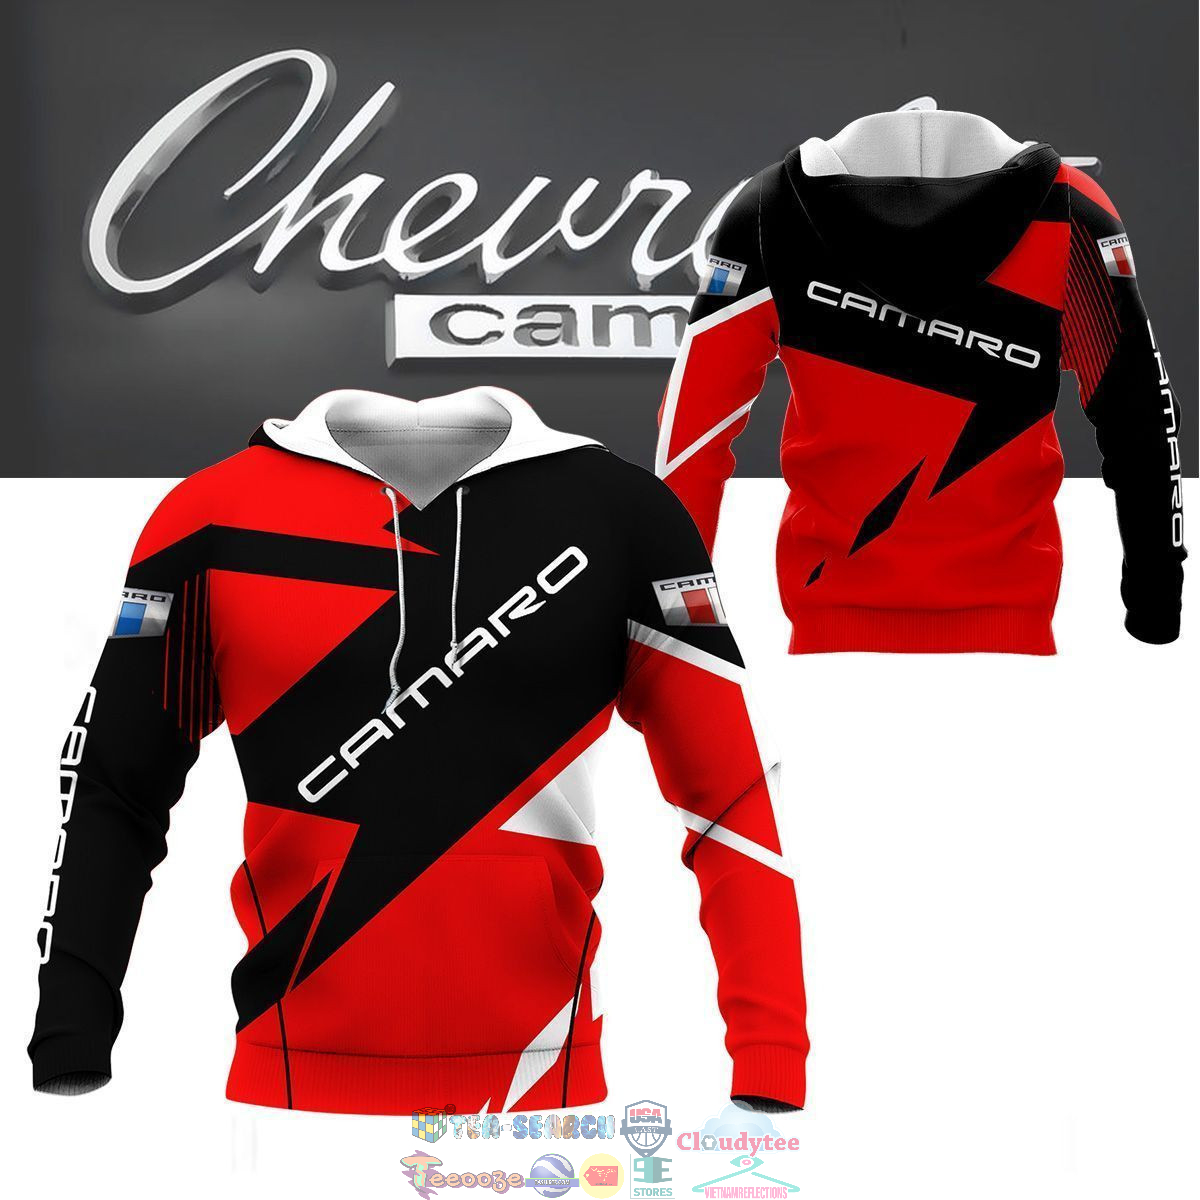 Chevrolet Camaro ver 13 3D hoodie and t-shirt – Saleoff